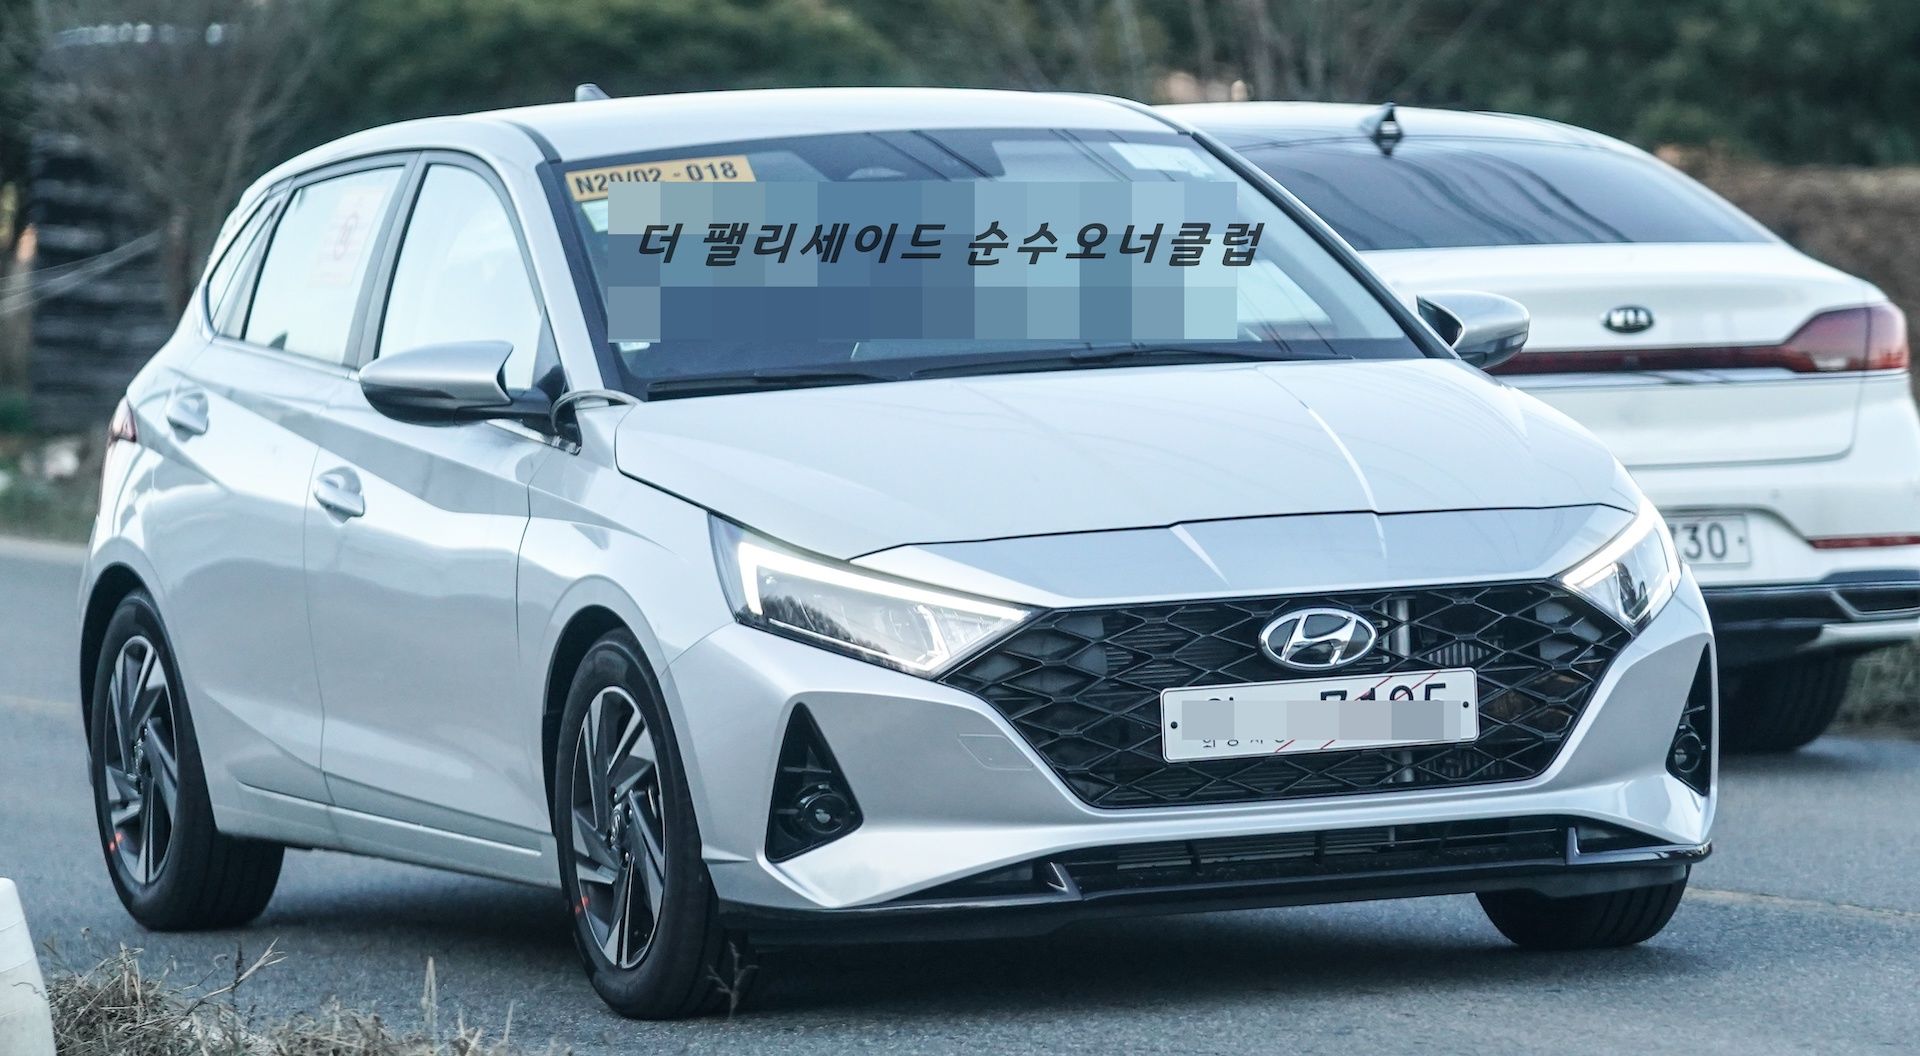 2020 Hyundai i20 front fascia. Image source: Club Palisade Korea